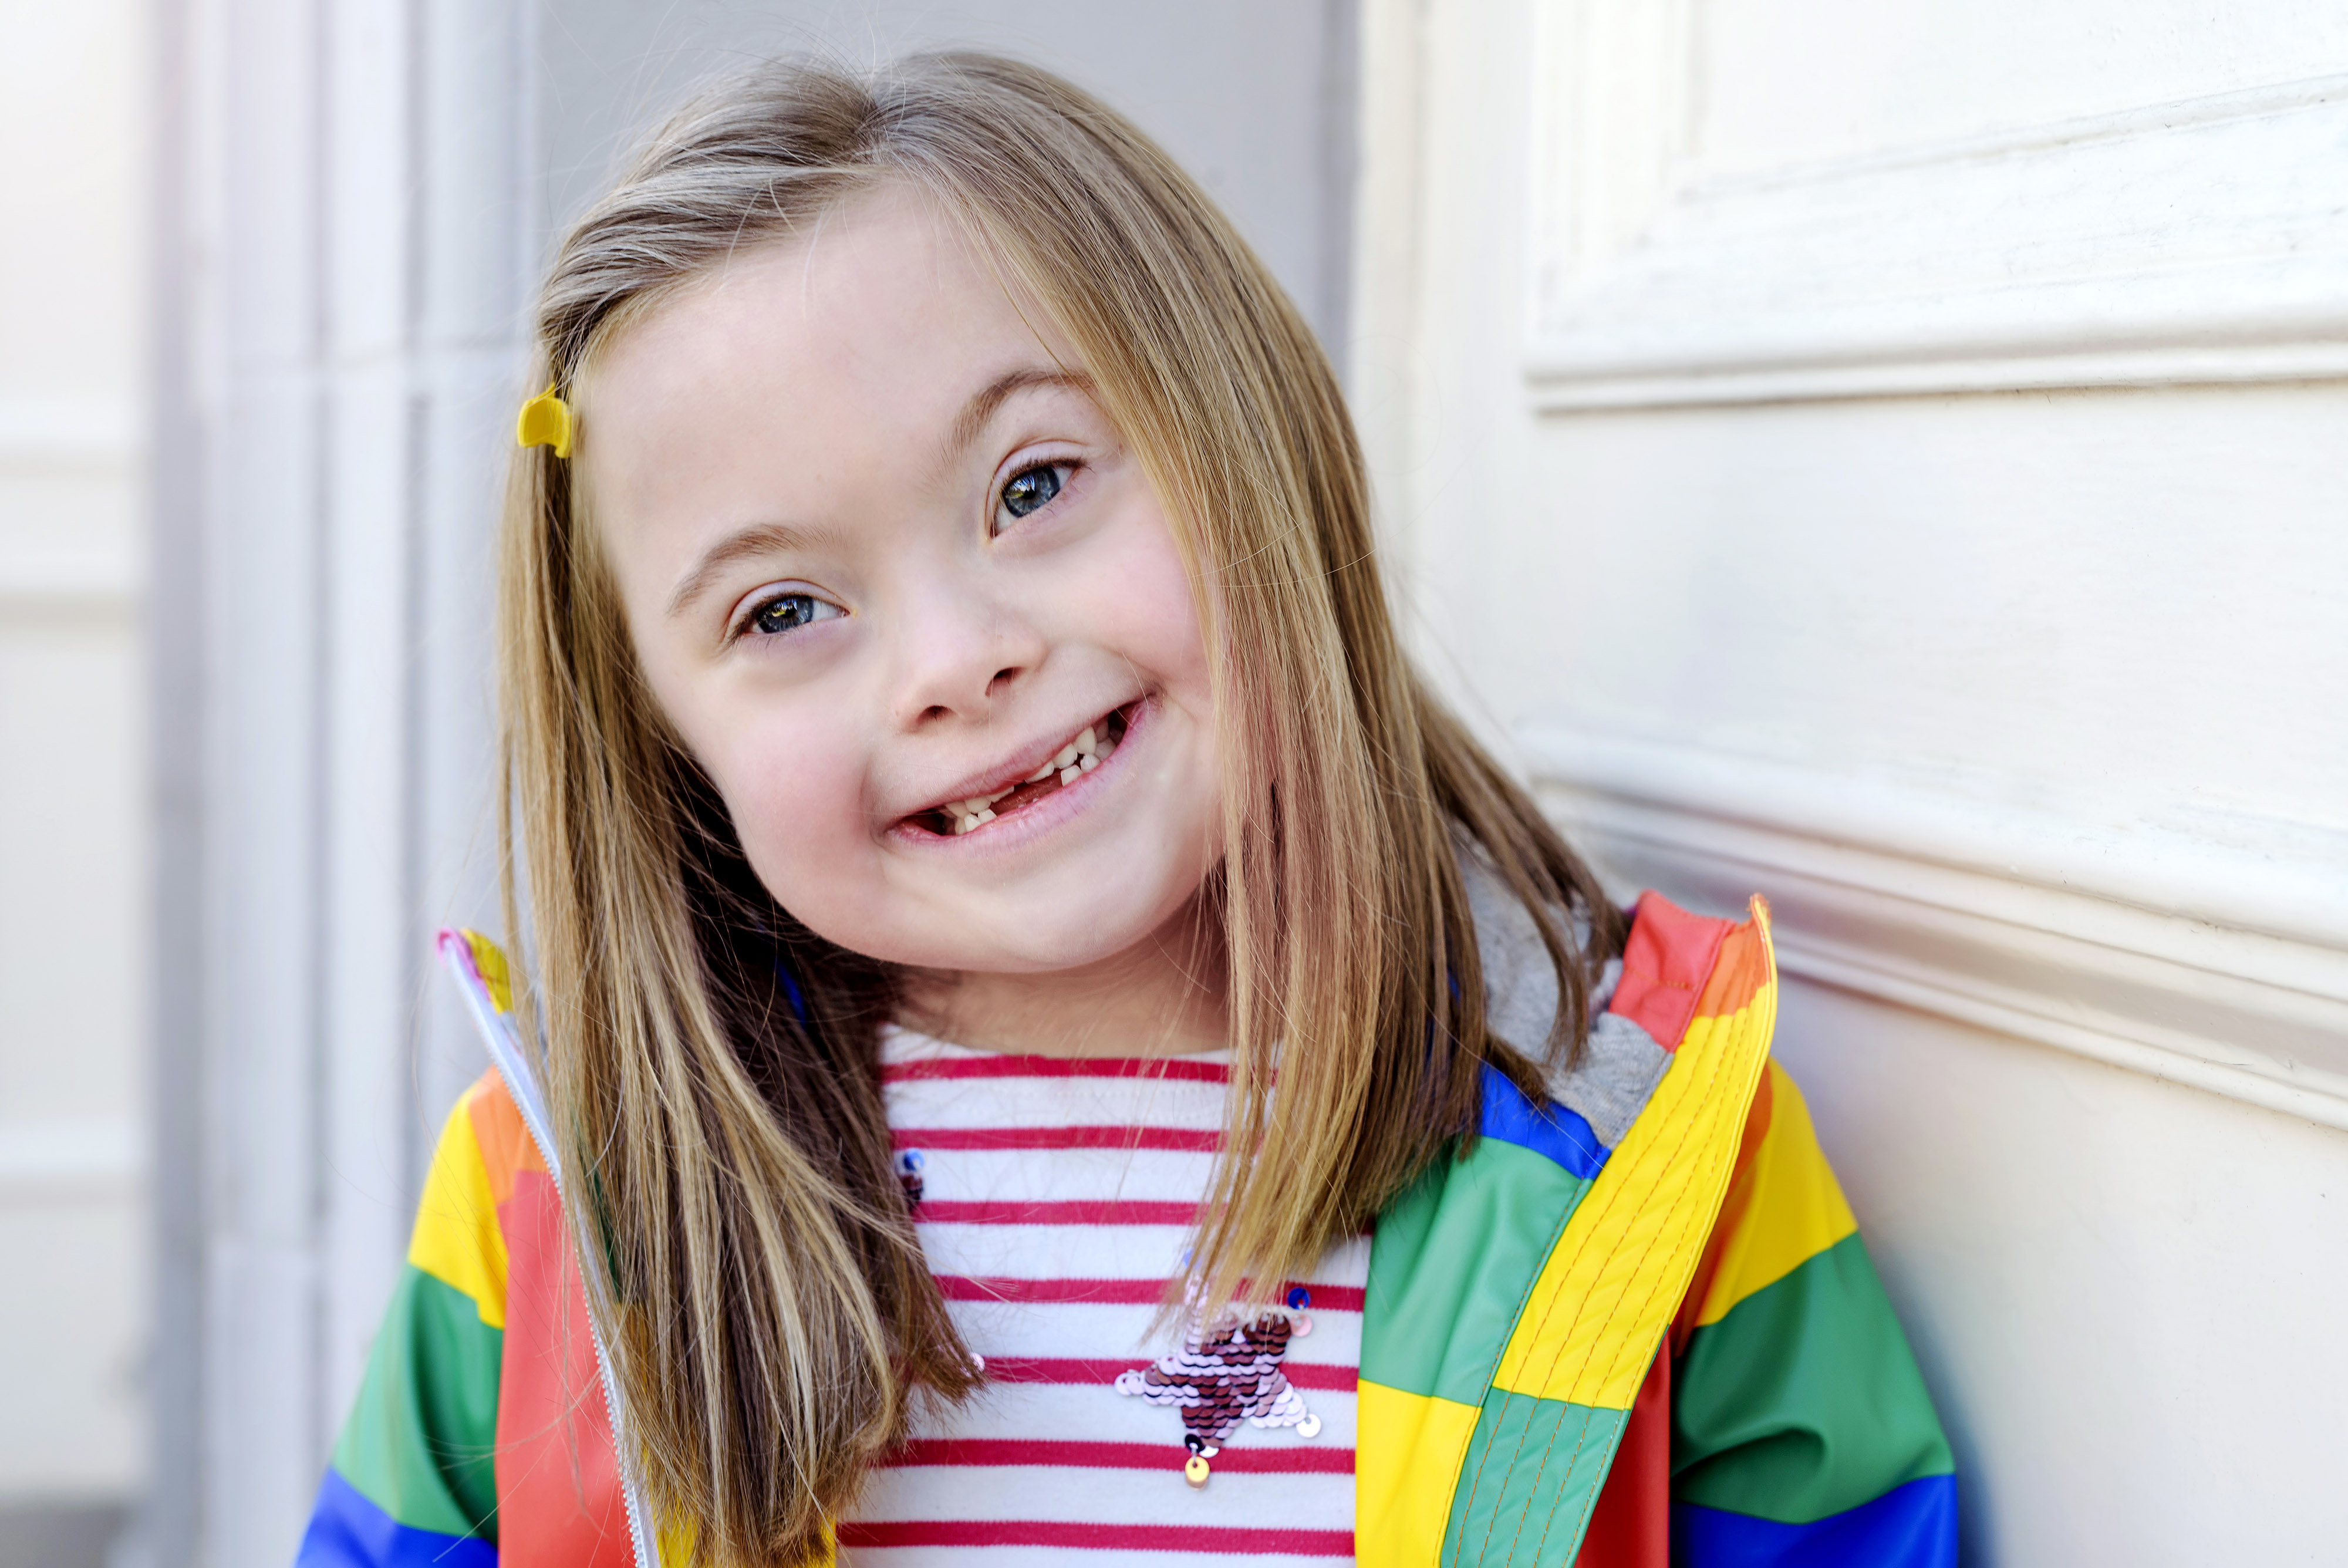 Ciara Burns, age 6 yrs. Ciara was born with Down Syndrome.